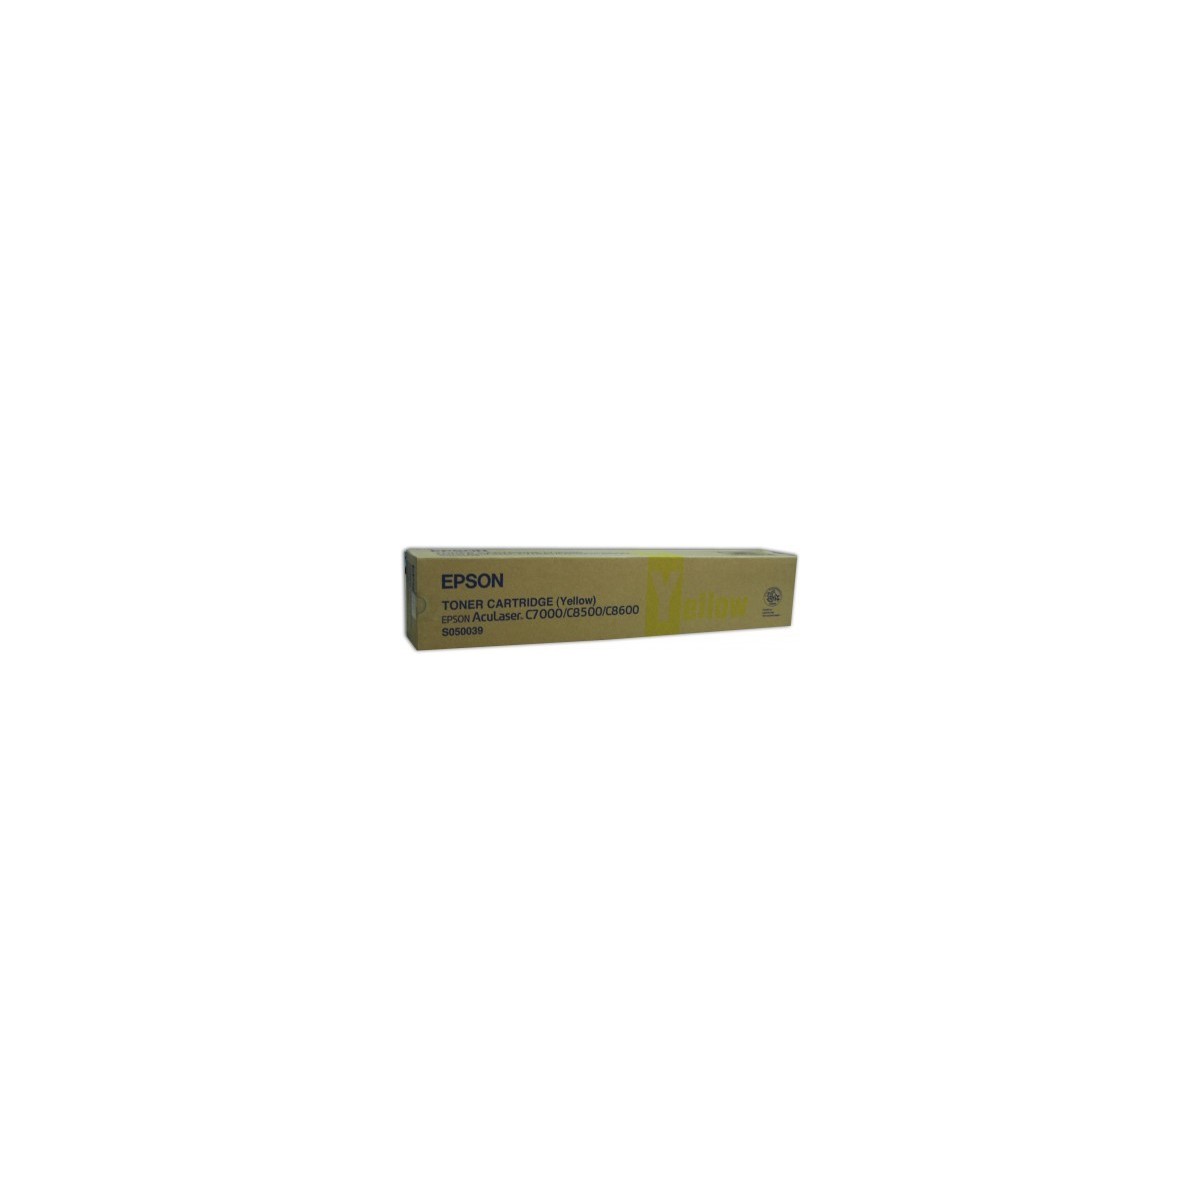 Epson AL-C8500/8600 Toner Cartridge Yellow 6k - 6000 pages - Yellow - 1 pc(s)